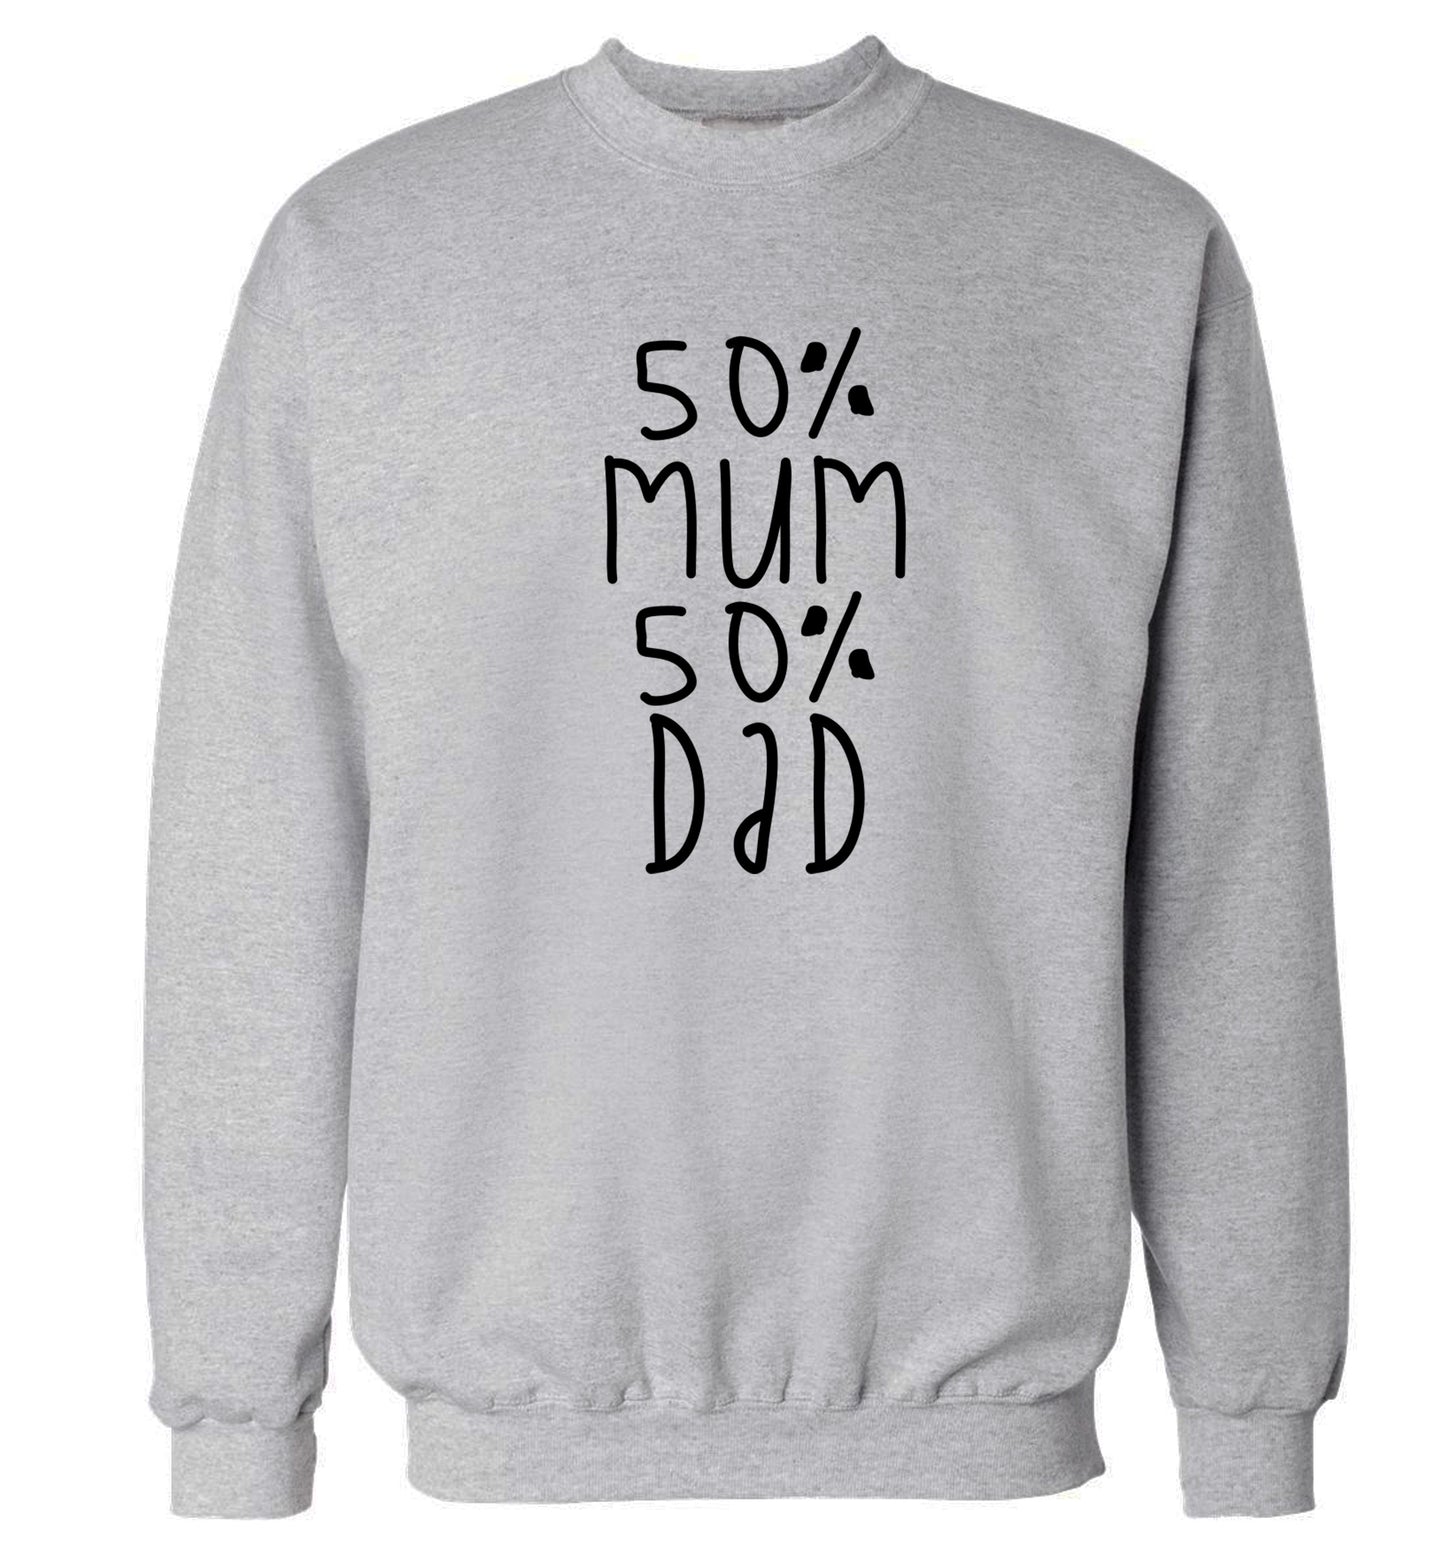 50% mum 50% dad Adult's unisex grey Sweater 2XL